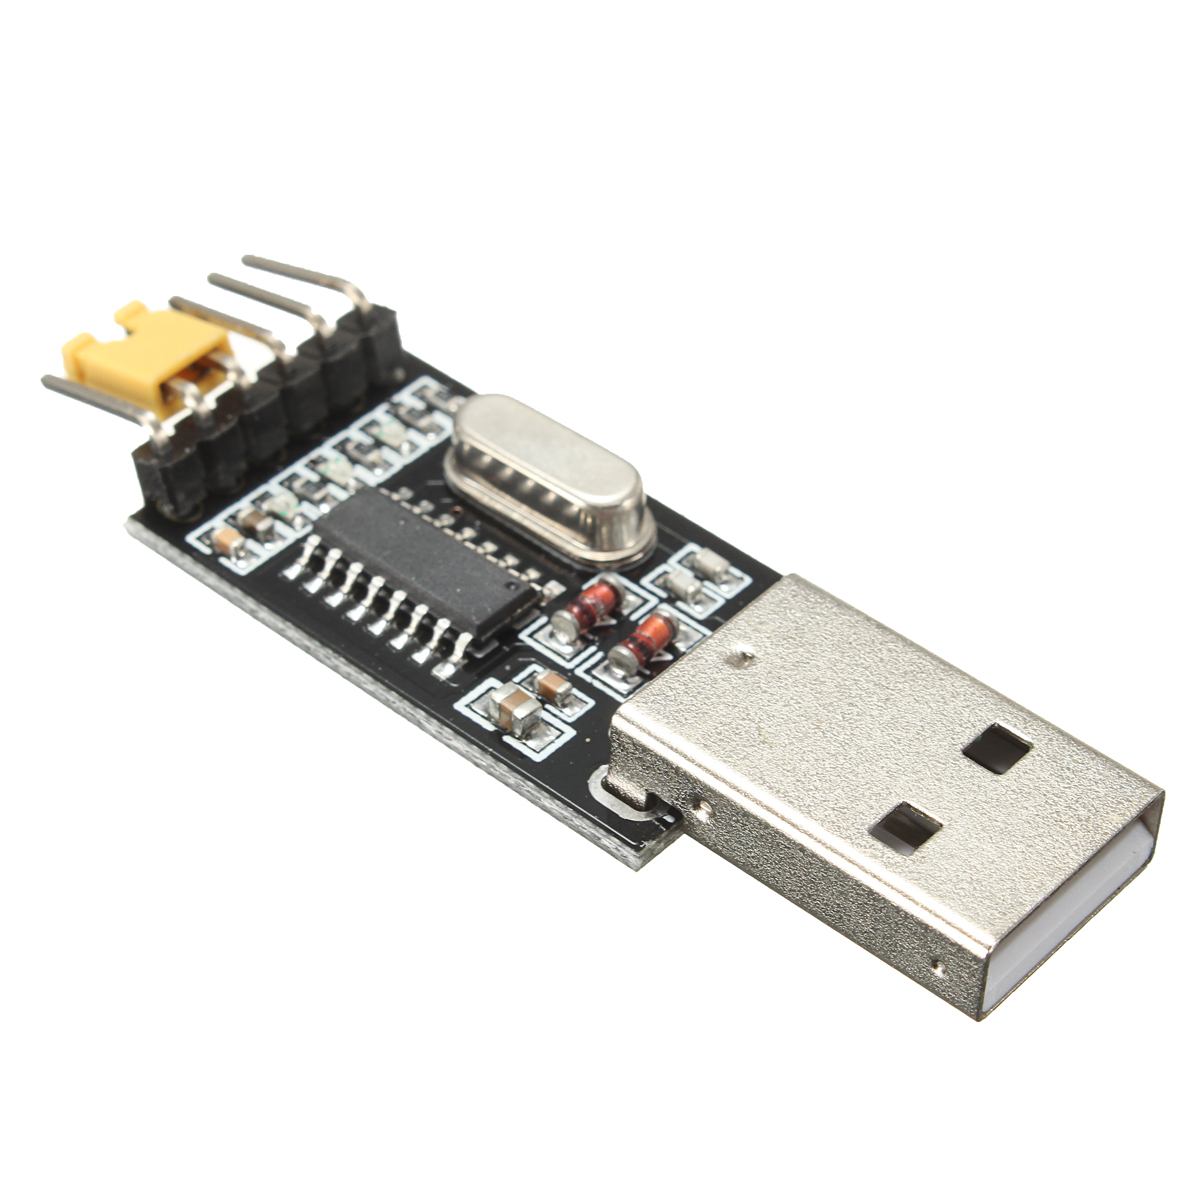 5pcs 3.3V 5V USB to TTL Convertor CH340G UART Serial Adapter Module STC 1